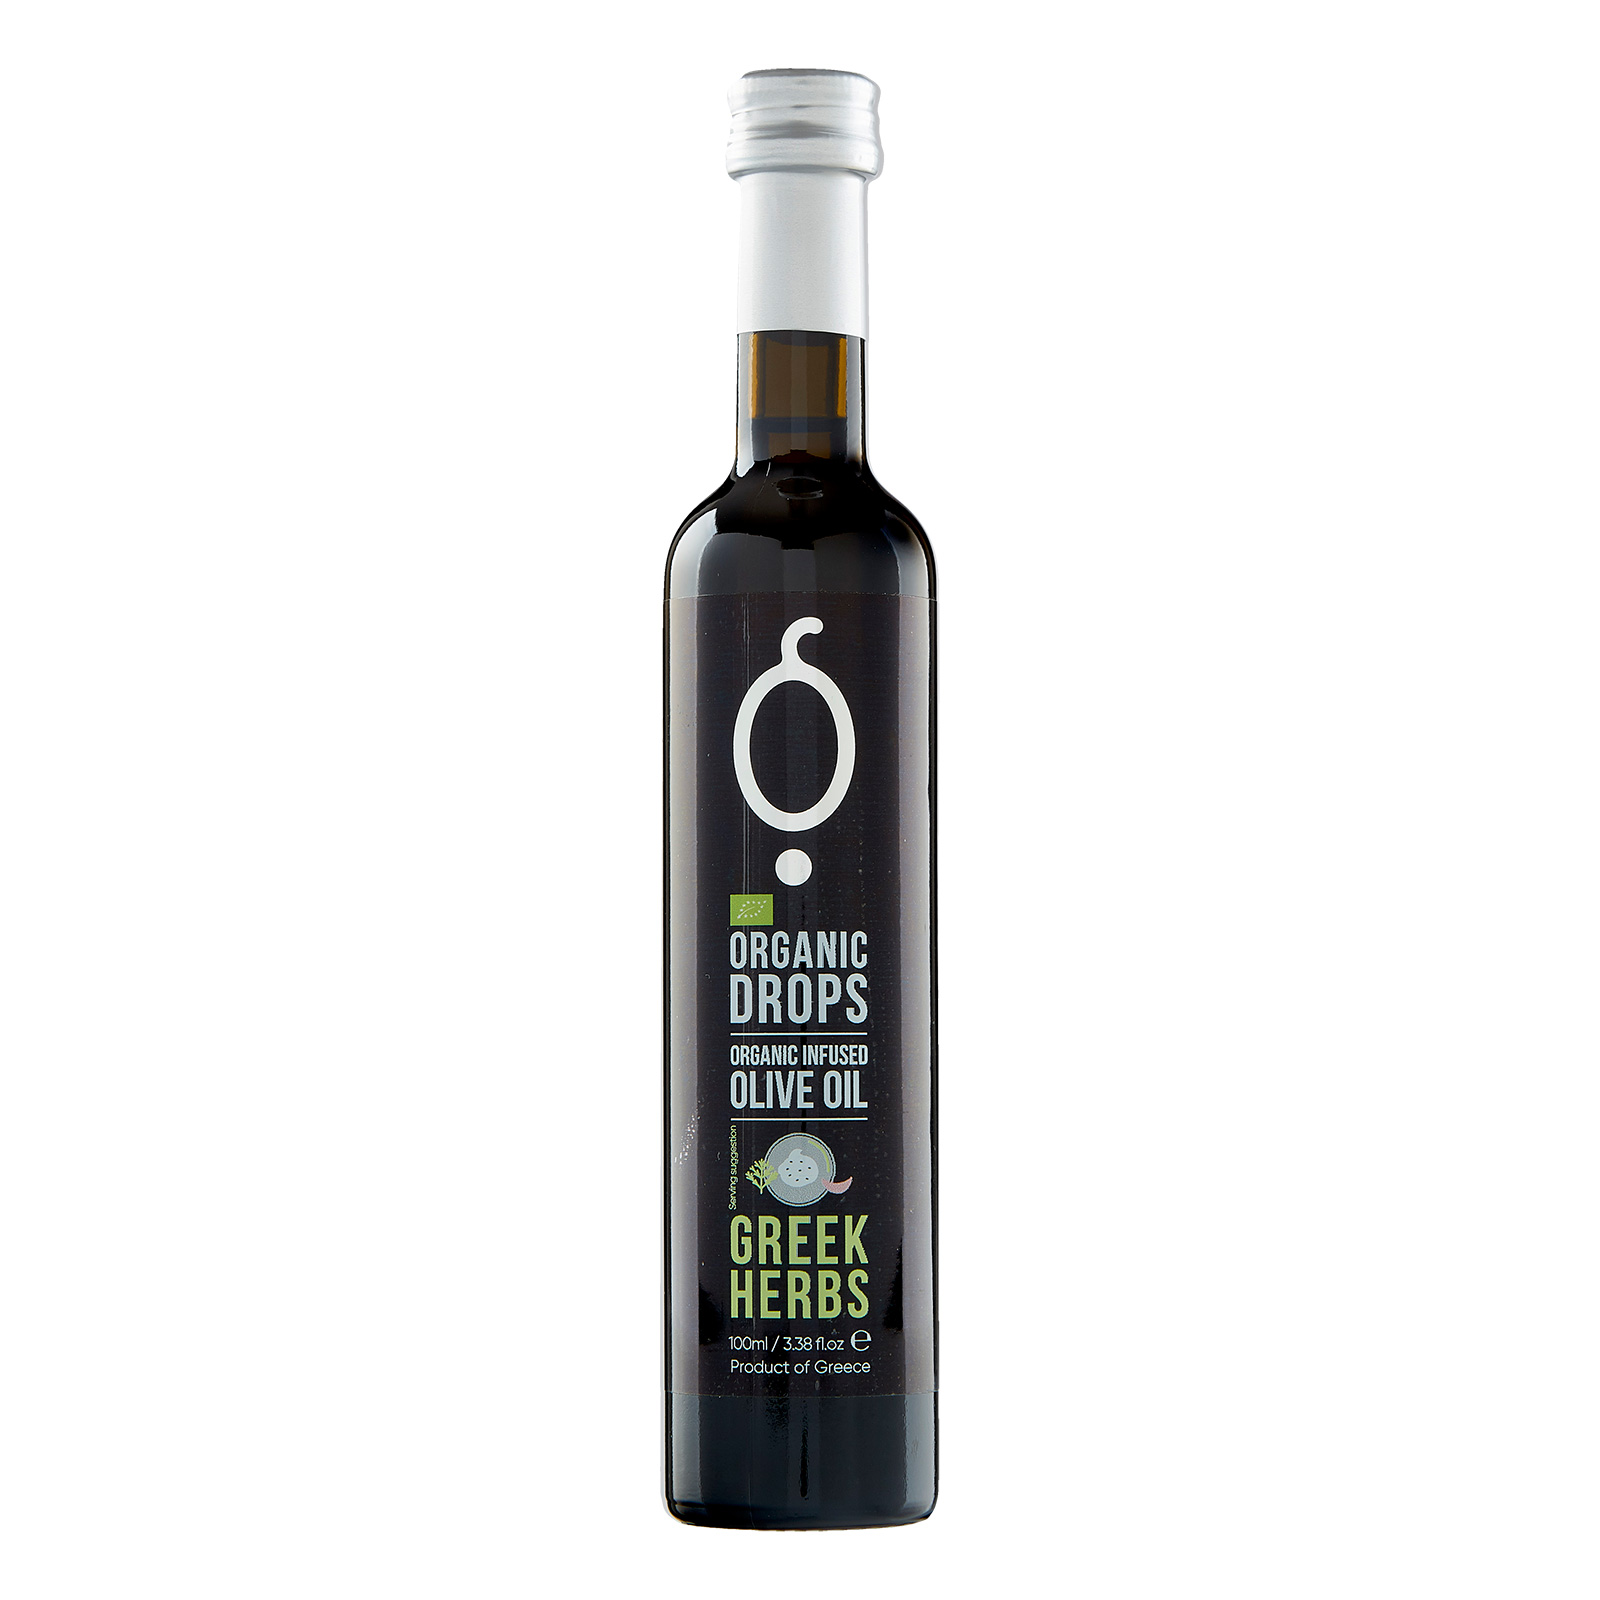 Organic Drops Greek Herbs Olive Oil 3.38 fl.oz Bottle